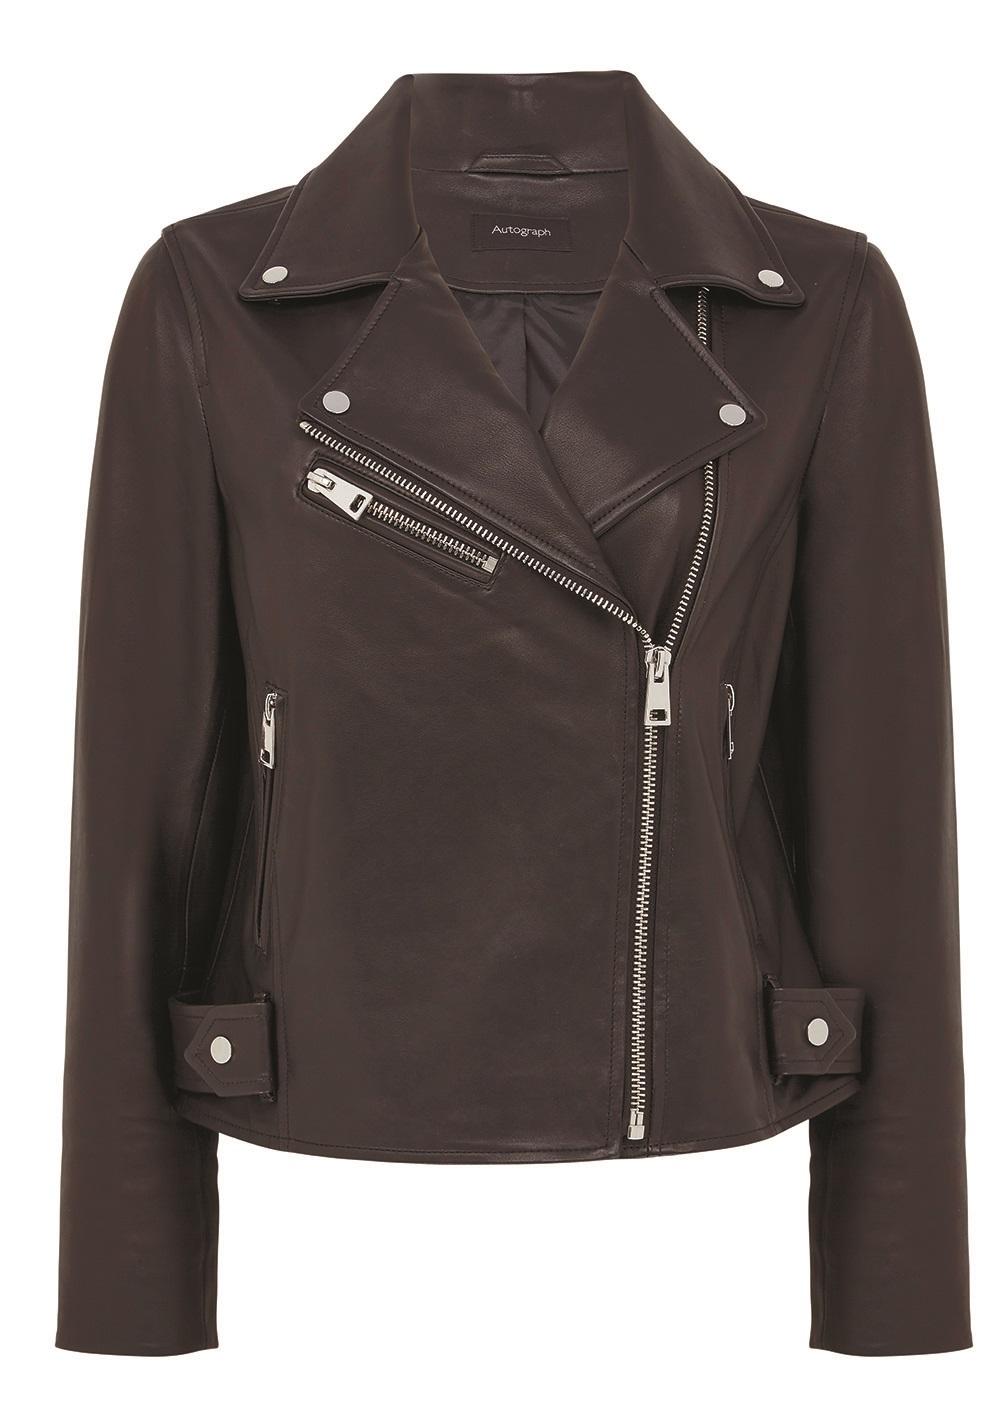 Marks & Spencer, Autograph Leather Jacket, £249